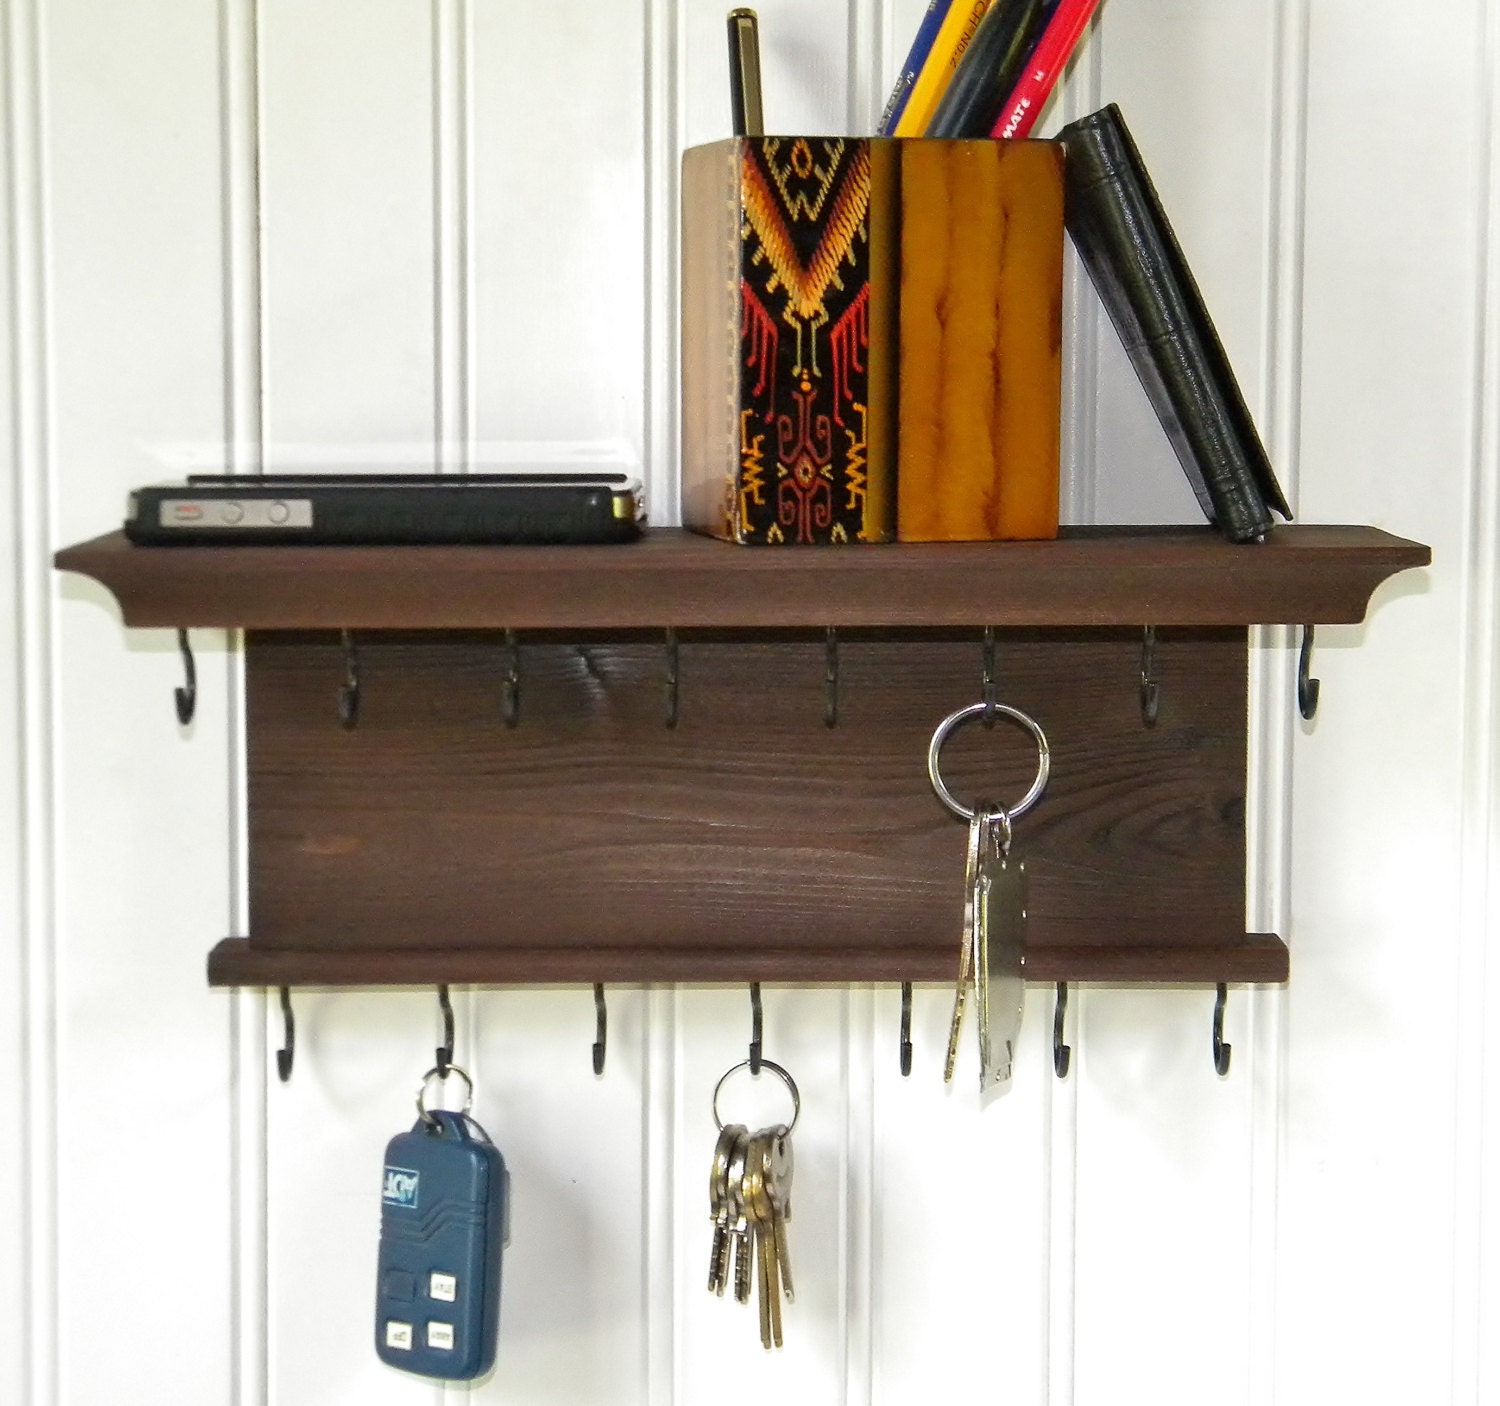 wall key holder with shelf